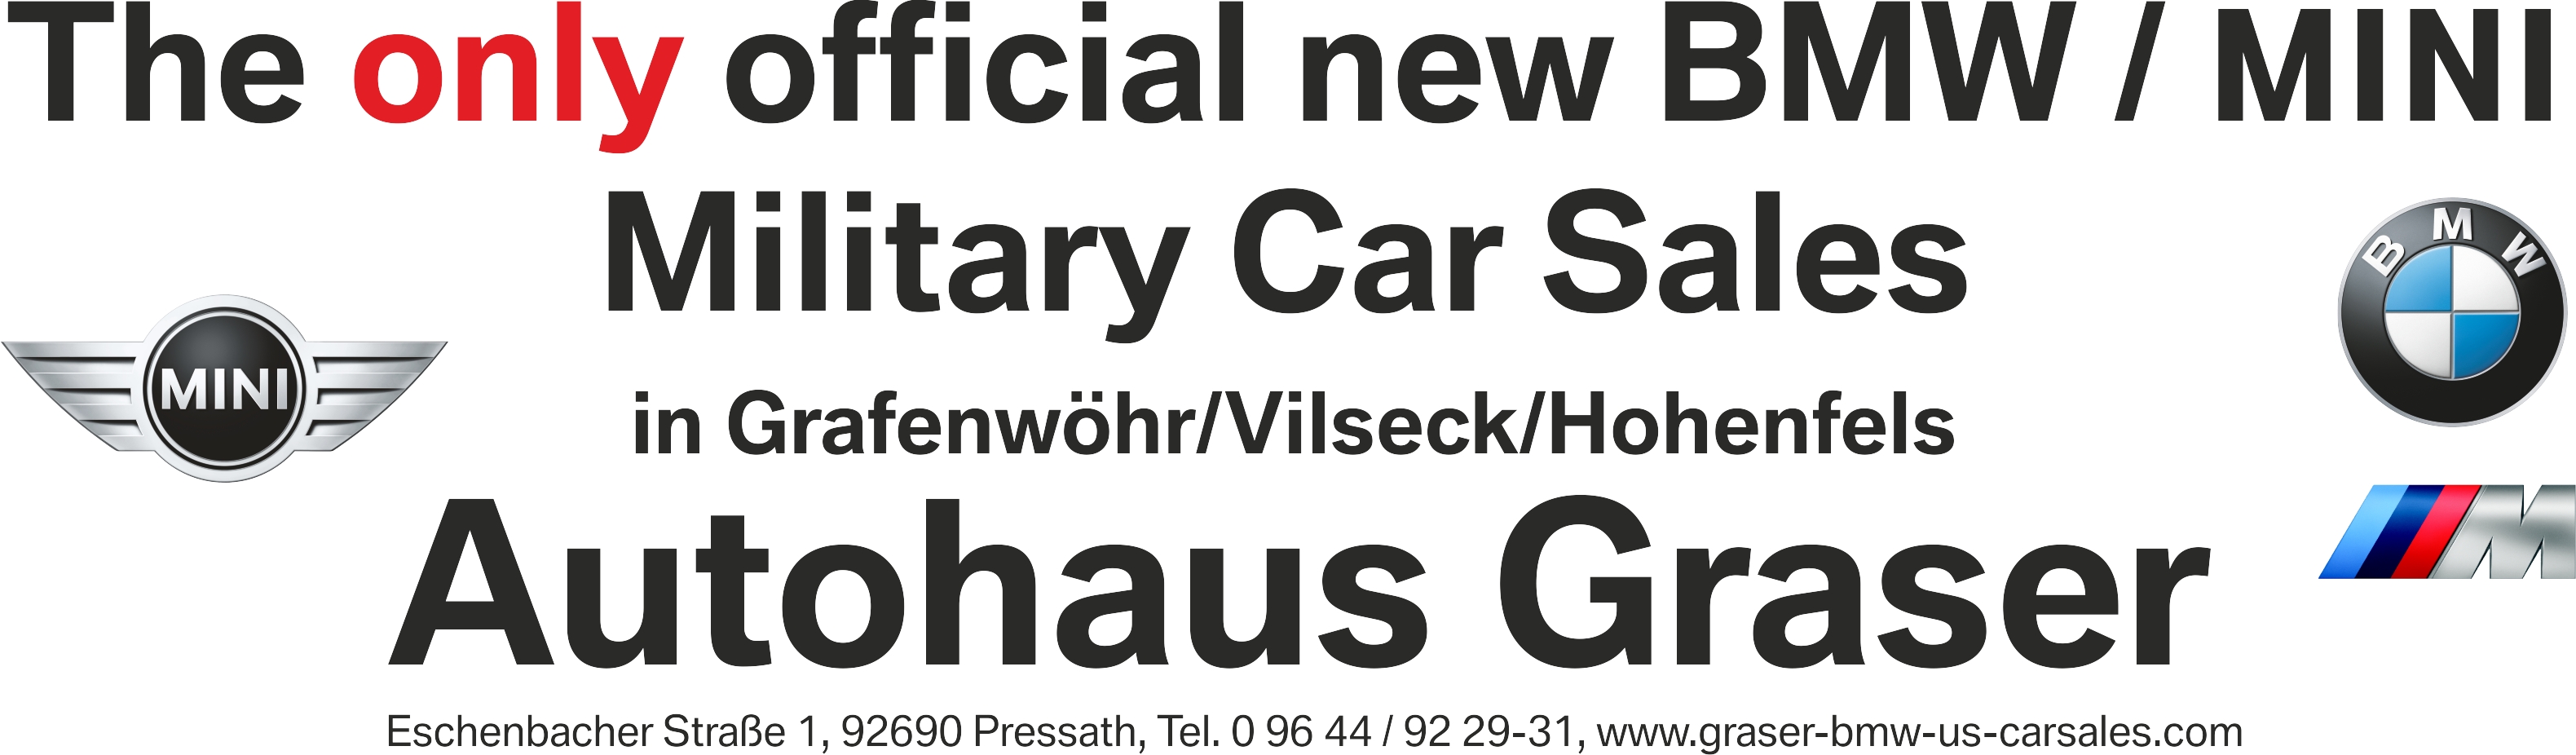 Autohaus_Graser_Logo.jpg